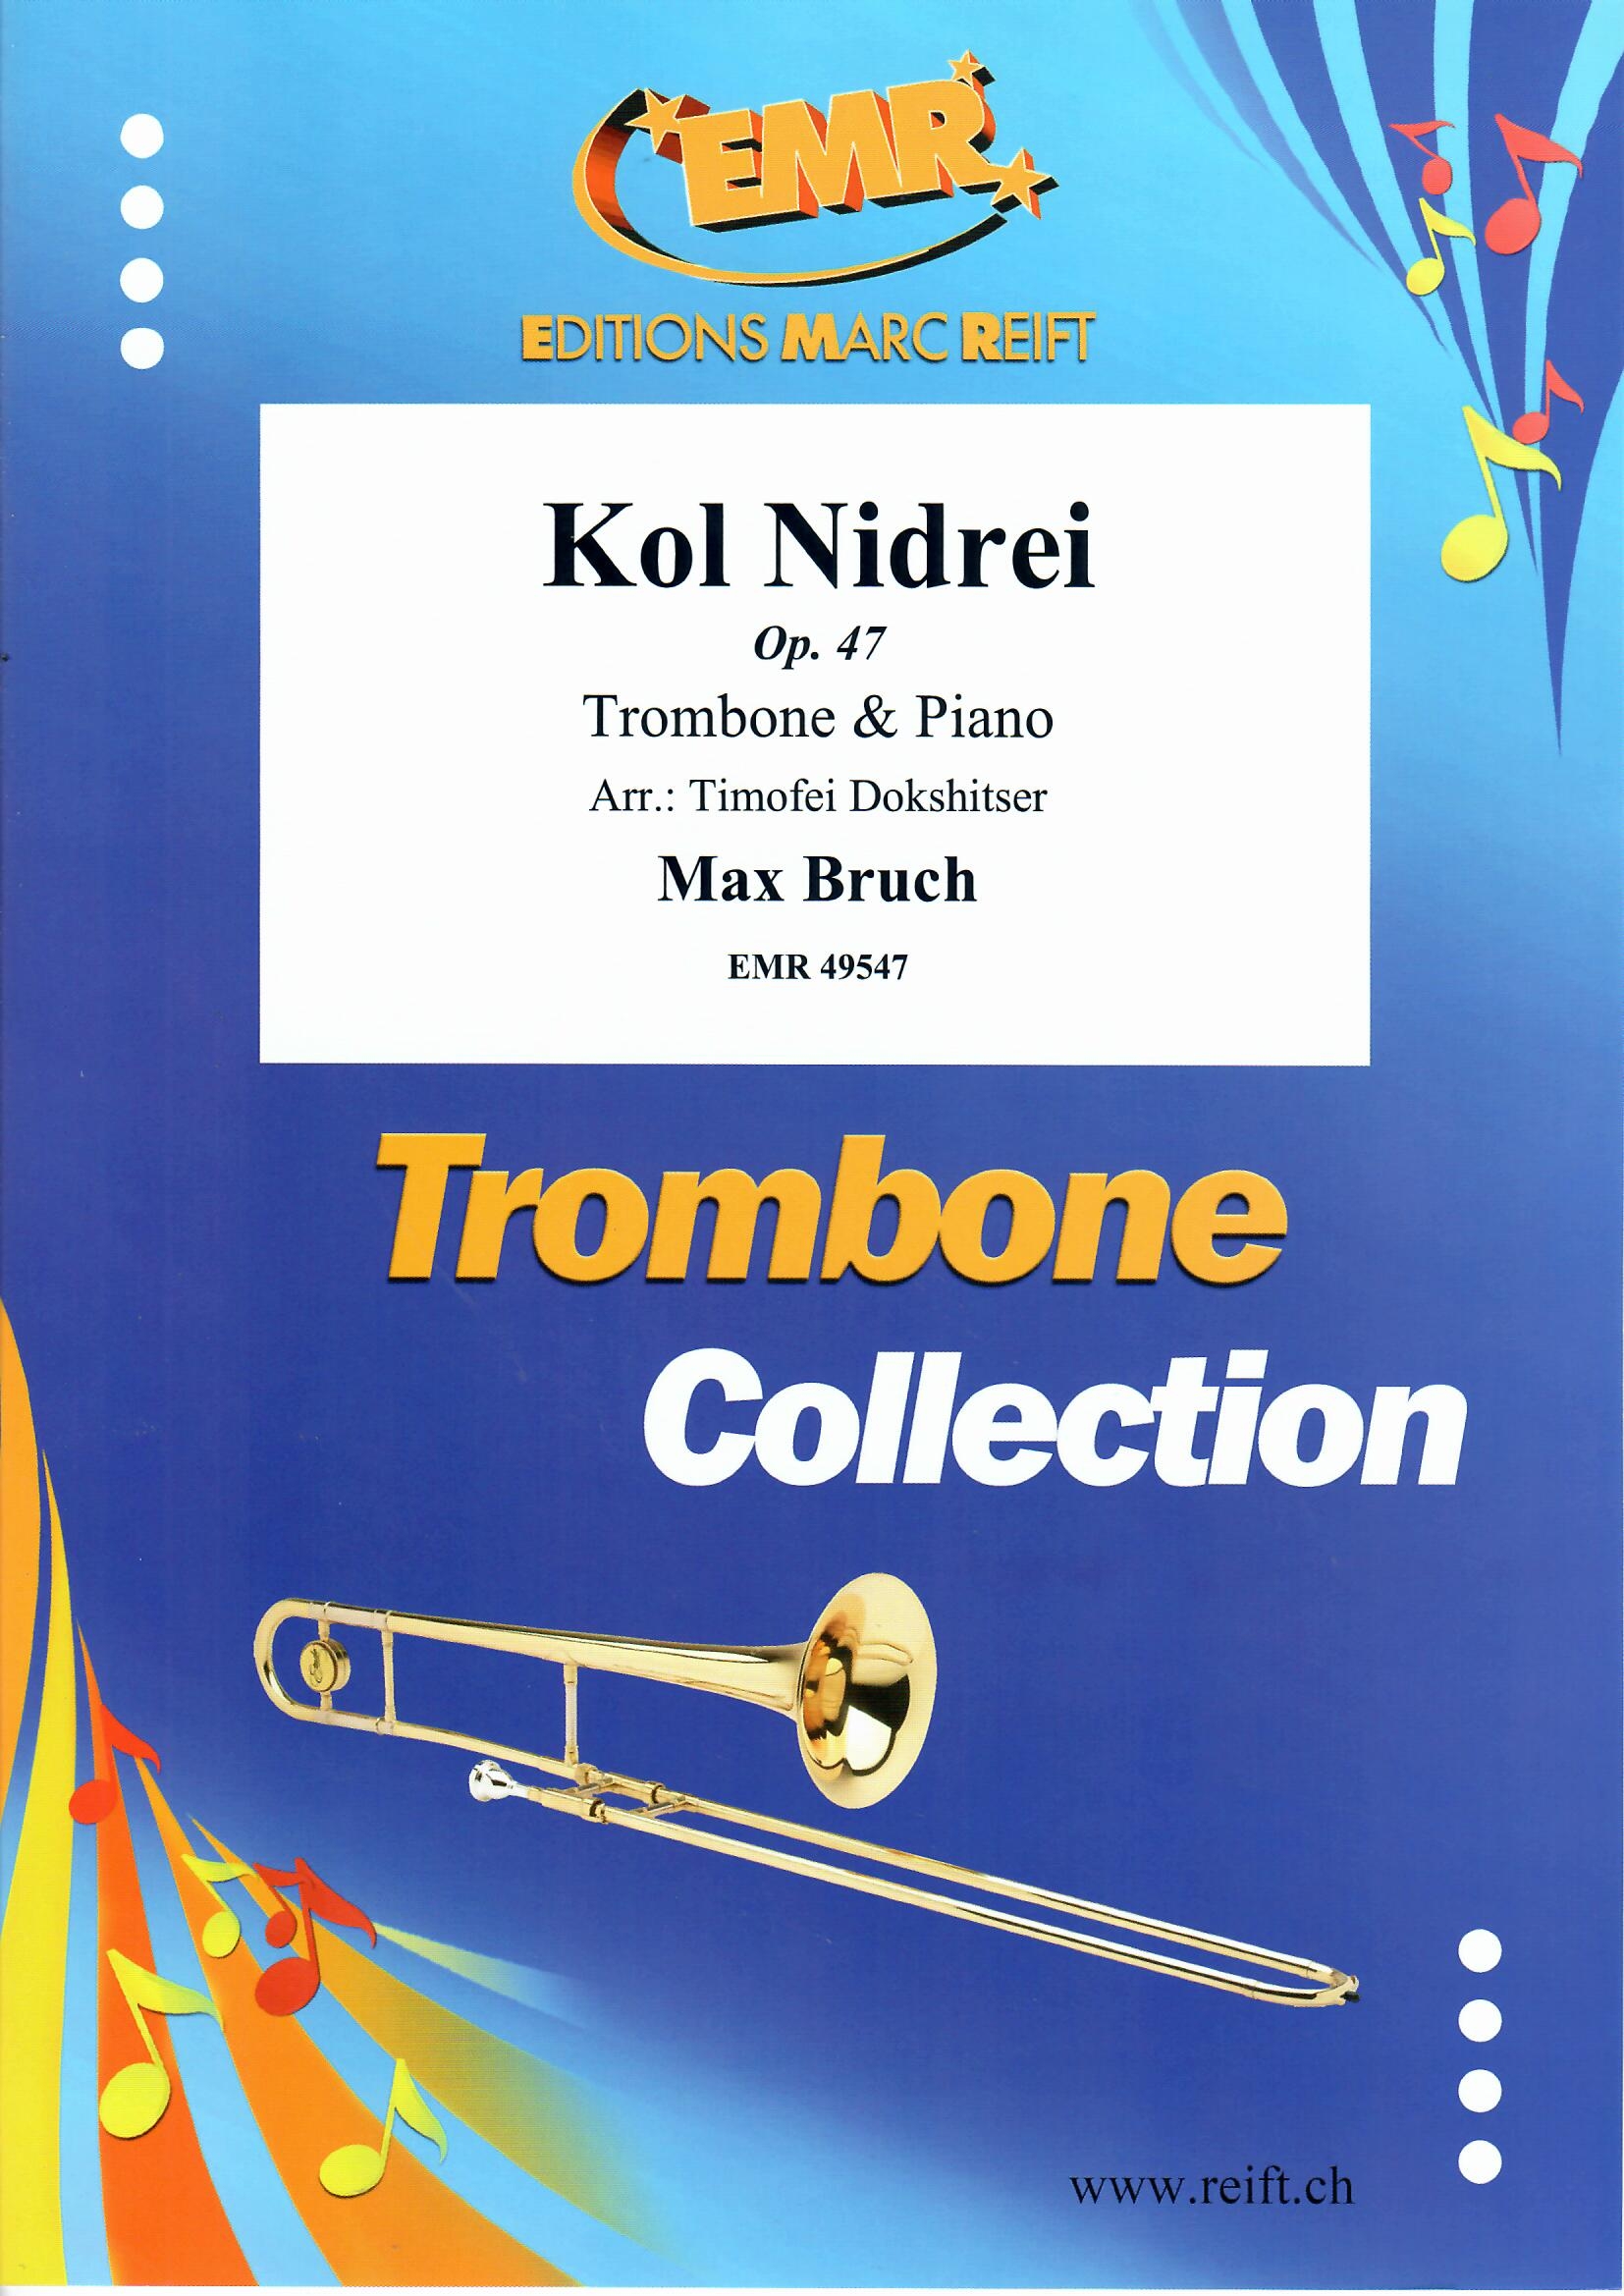 KOL NIDREI - Trombone & Piano